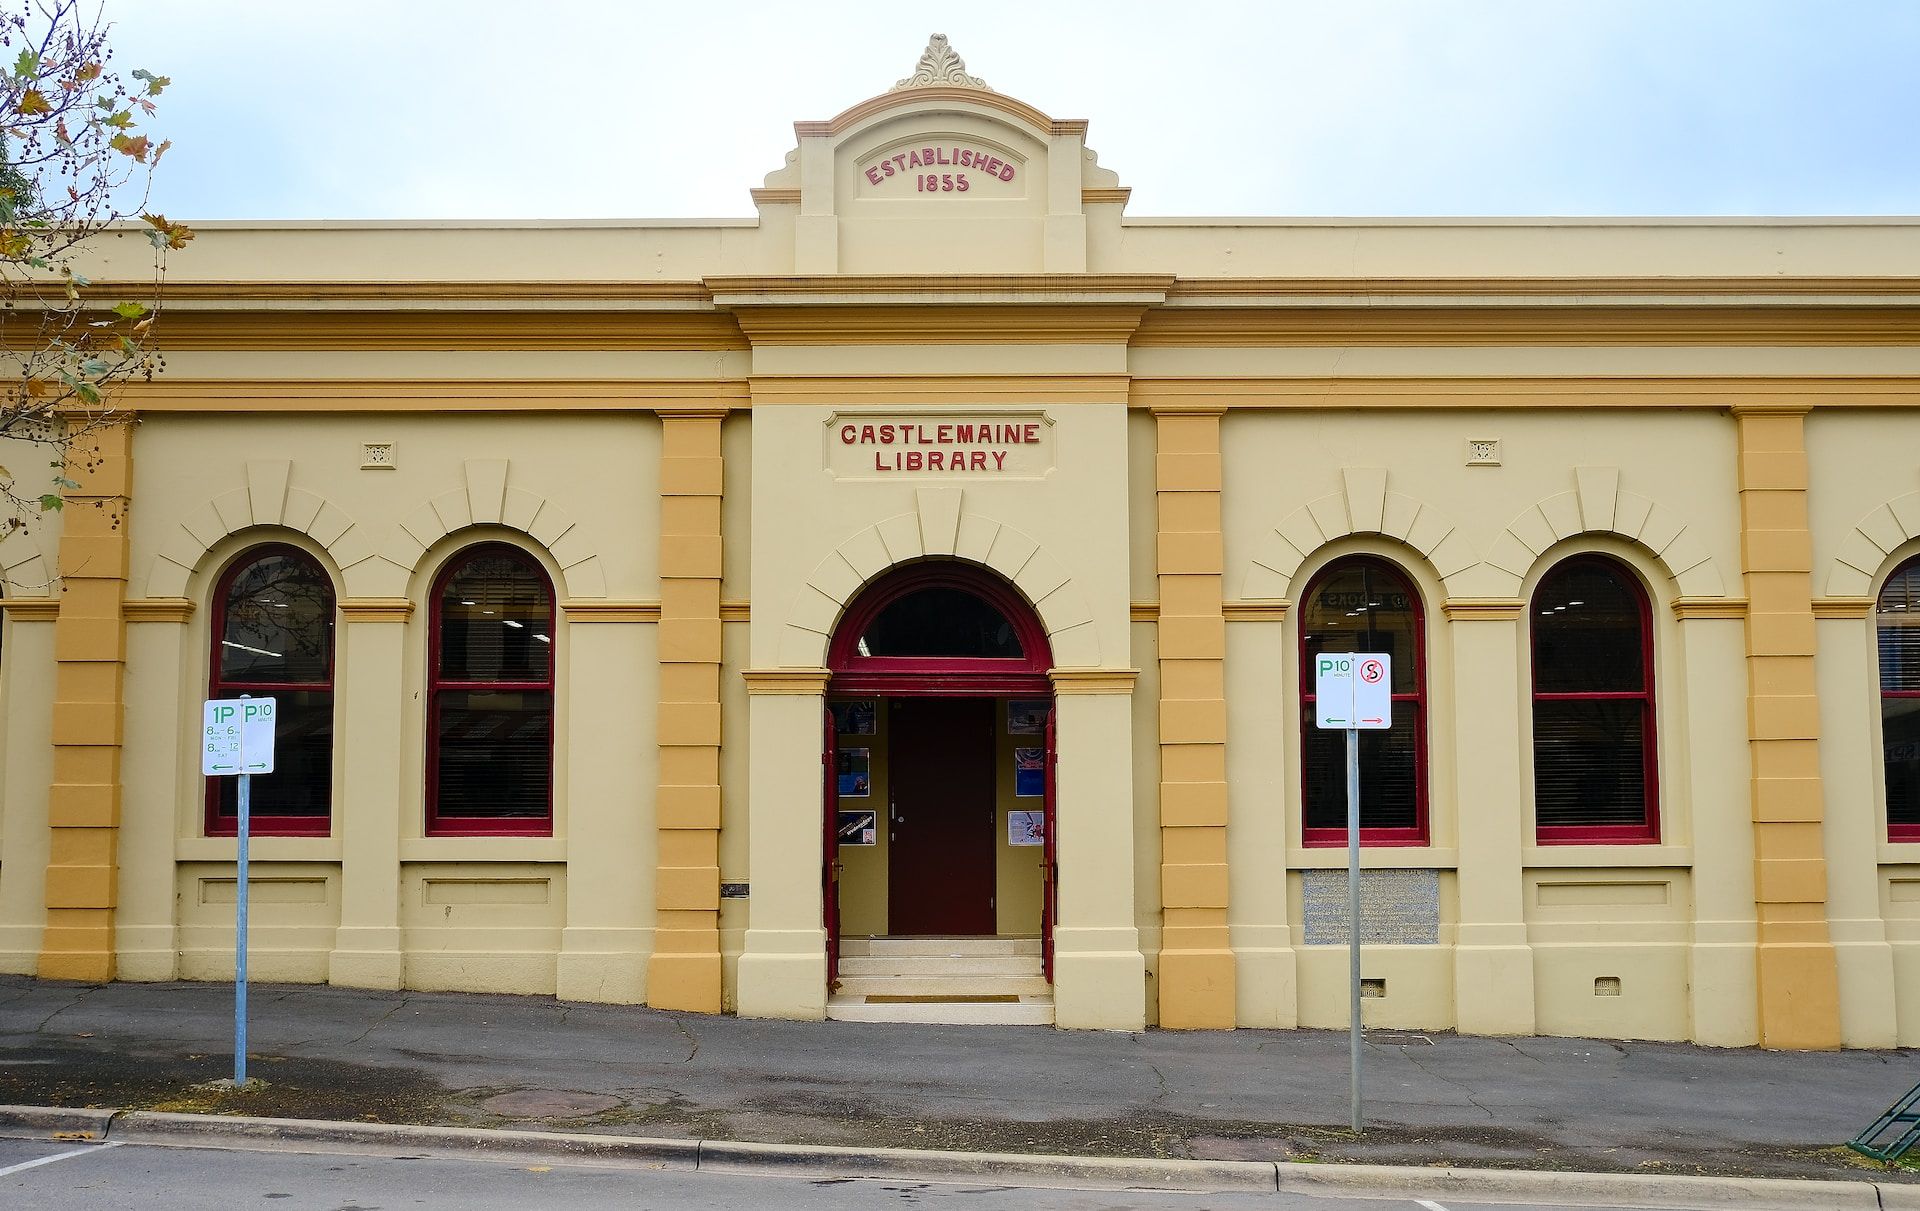 Castlemaine Library in Castlemaine, Victoria, Australia